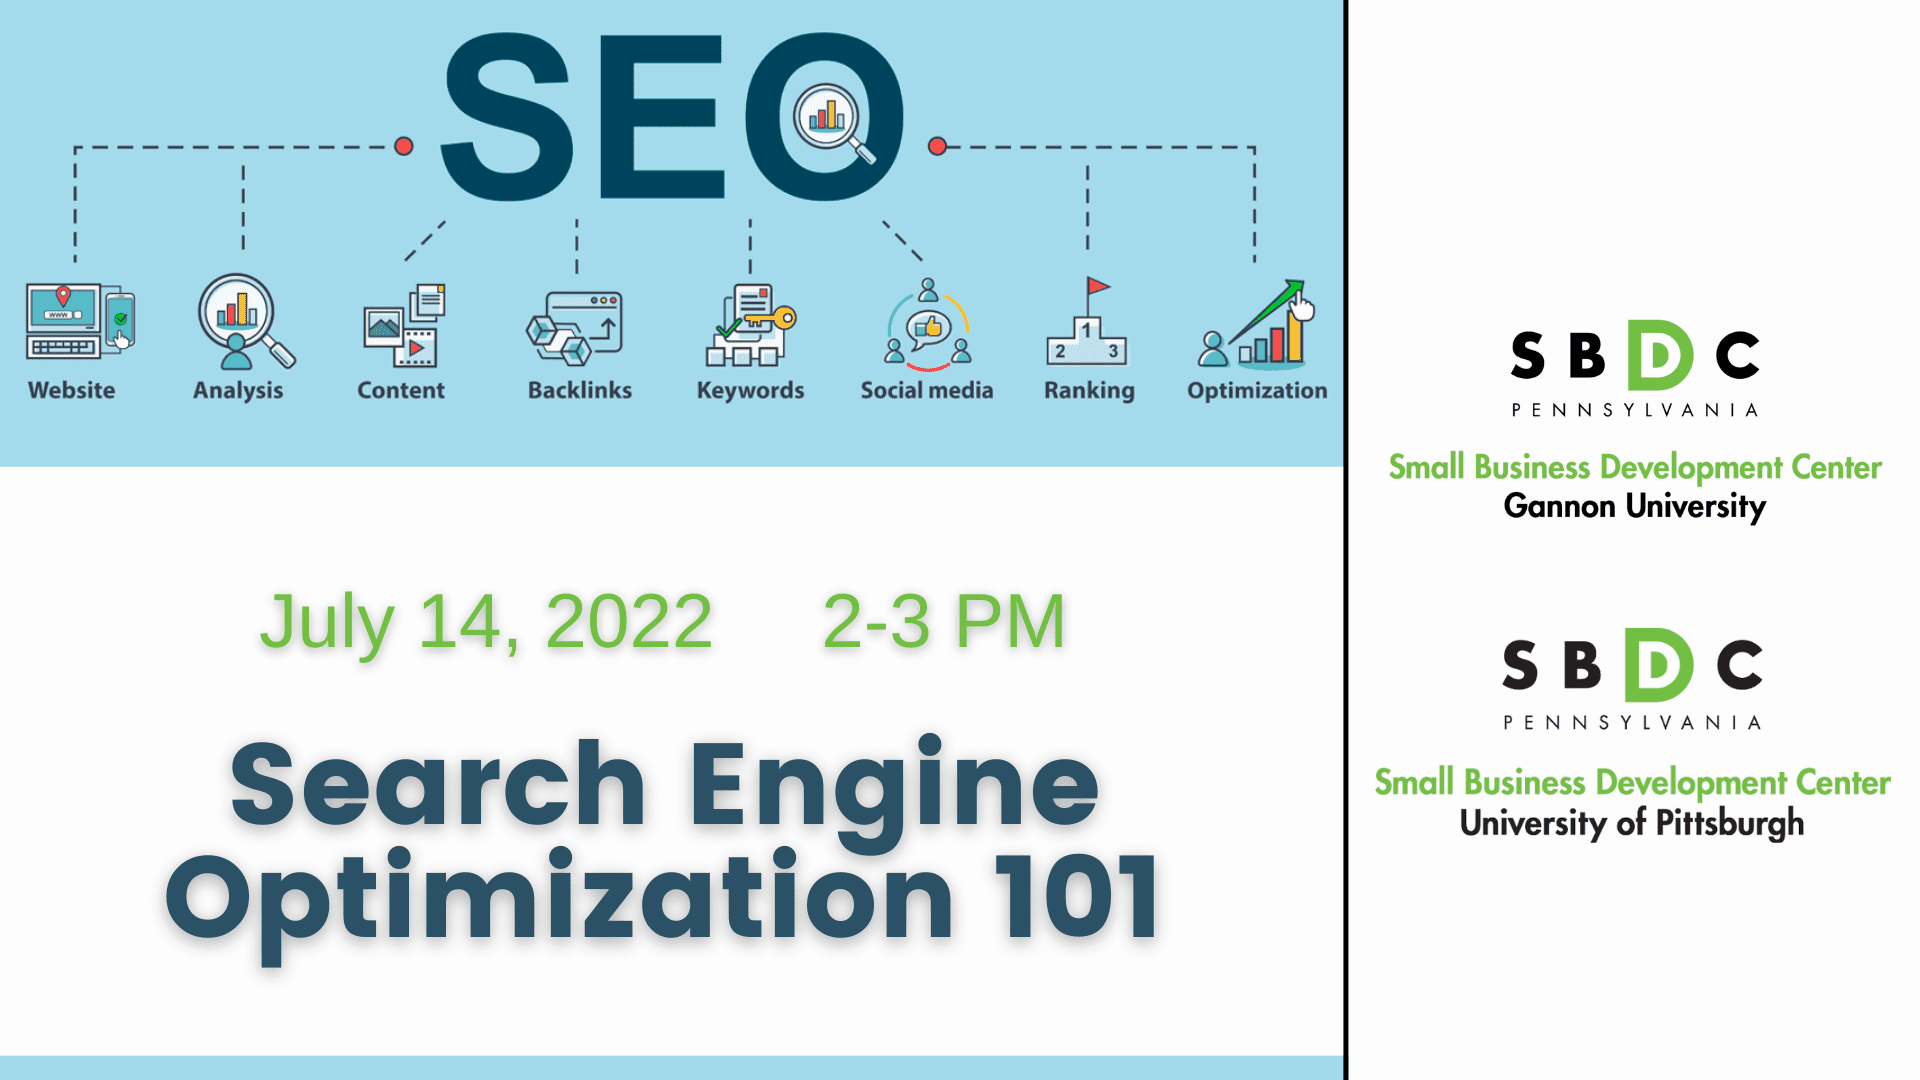 Search Engine Optimization 101